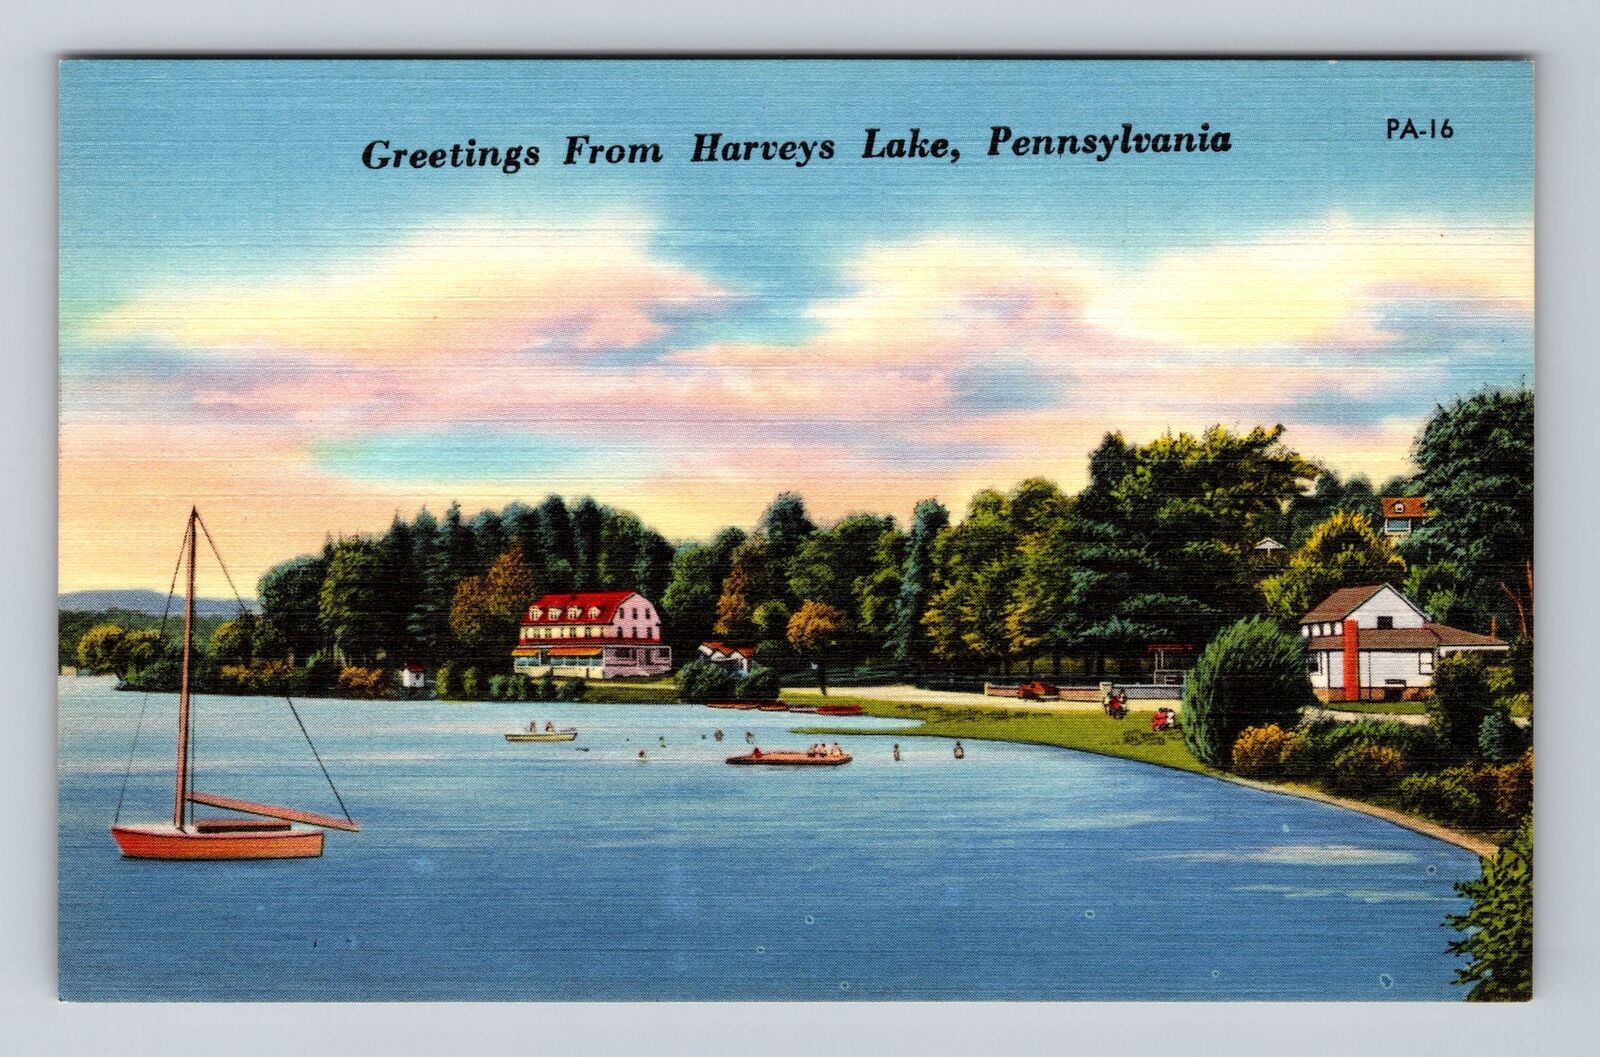 Harveys Lake PA-Pennsylvania, Scenic General Greetings Lake, Vintage Postcard